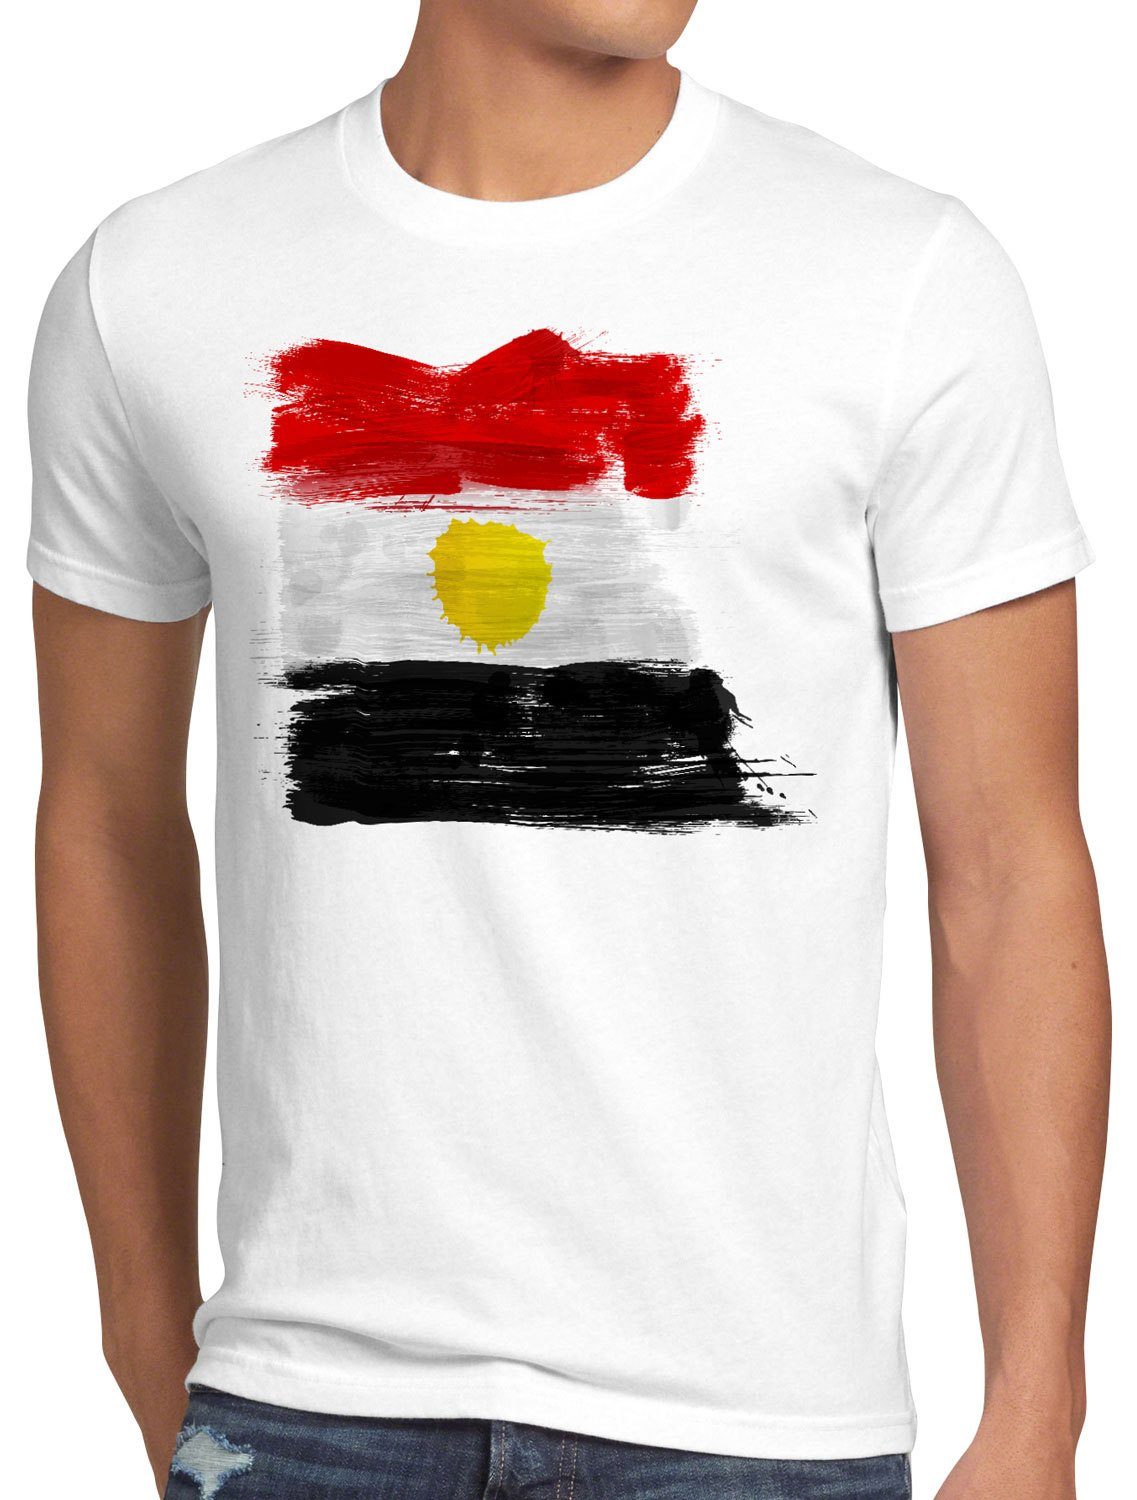 Super meistverkaufte Produkte style3 Print-Shirt Herren Flagge T-Shirt weiß WM Egypt Sport Fußball Ägypten EM Fahne